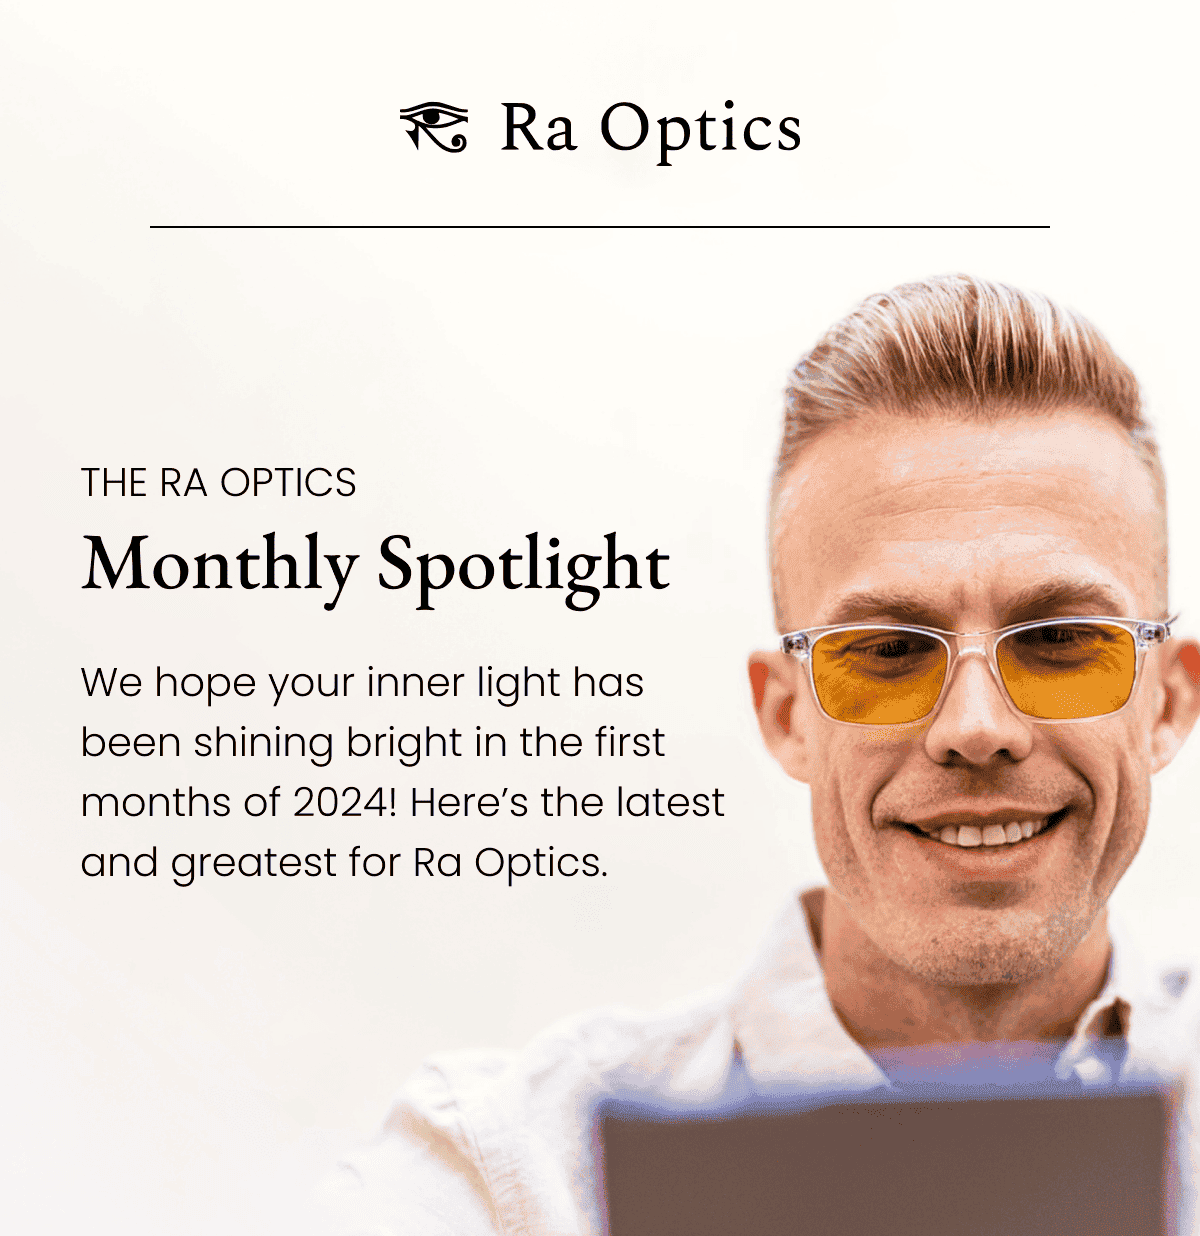 THE RA OPTICS Monthly Spotlight